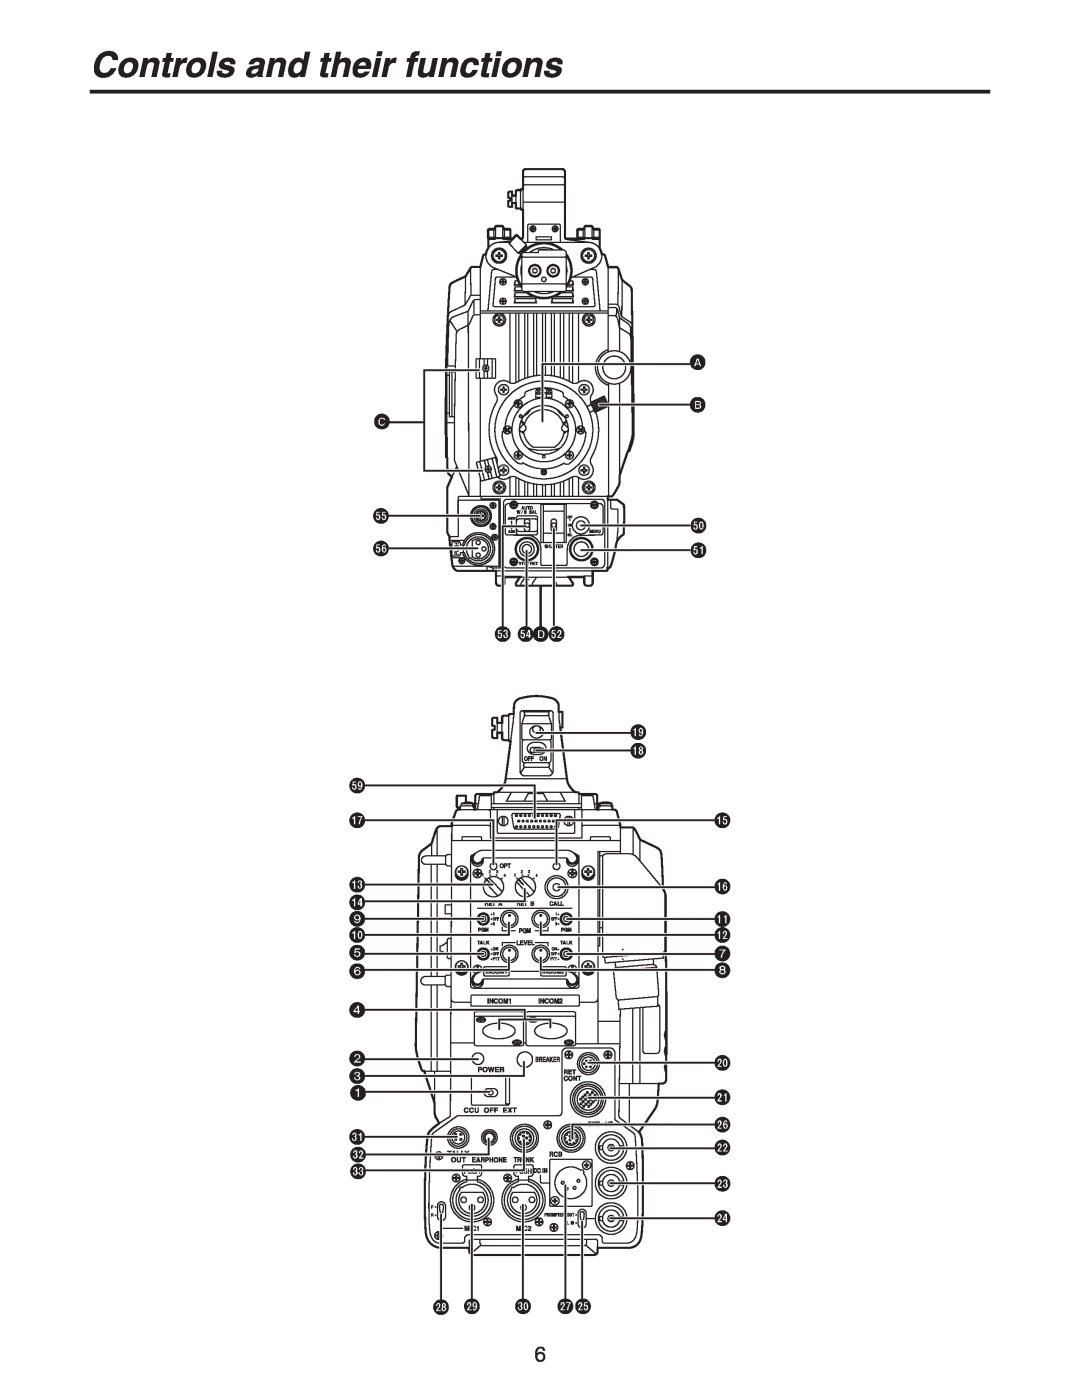 Panasonic AK-HC931BP manual Controls and their functions 